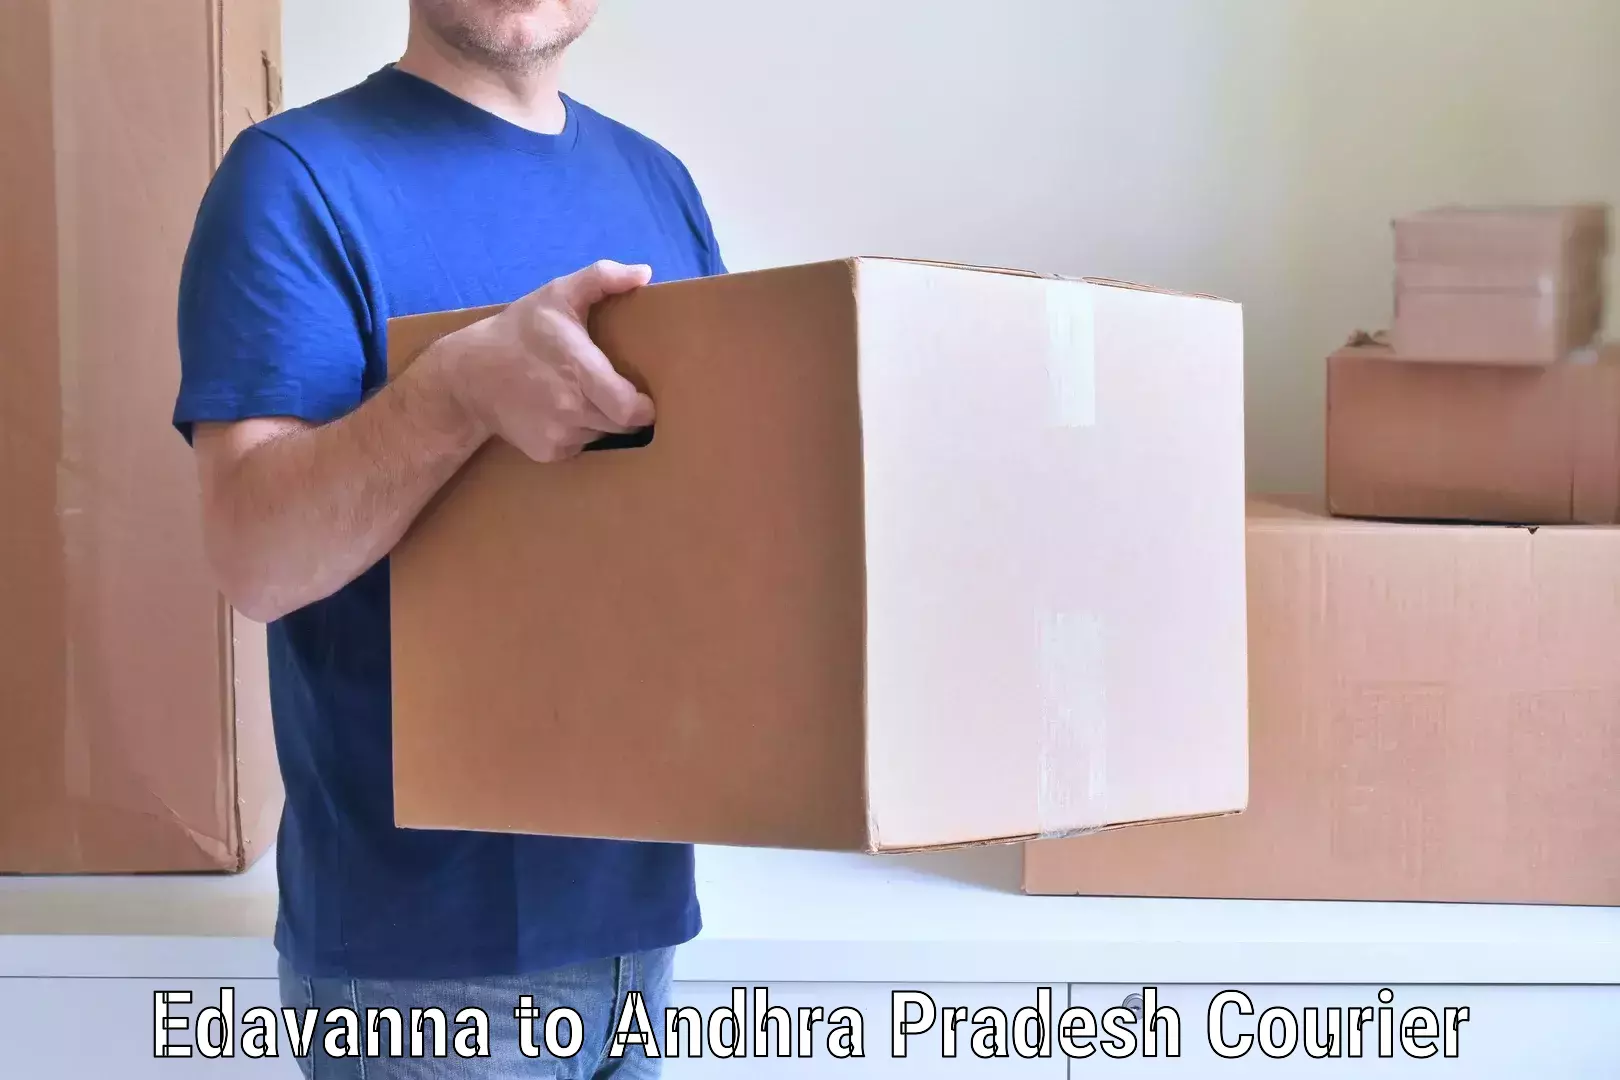 Furniture delivery service Edavanna to Puttur Tirupati